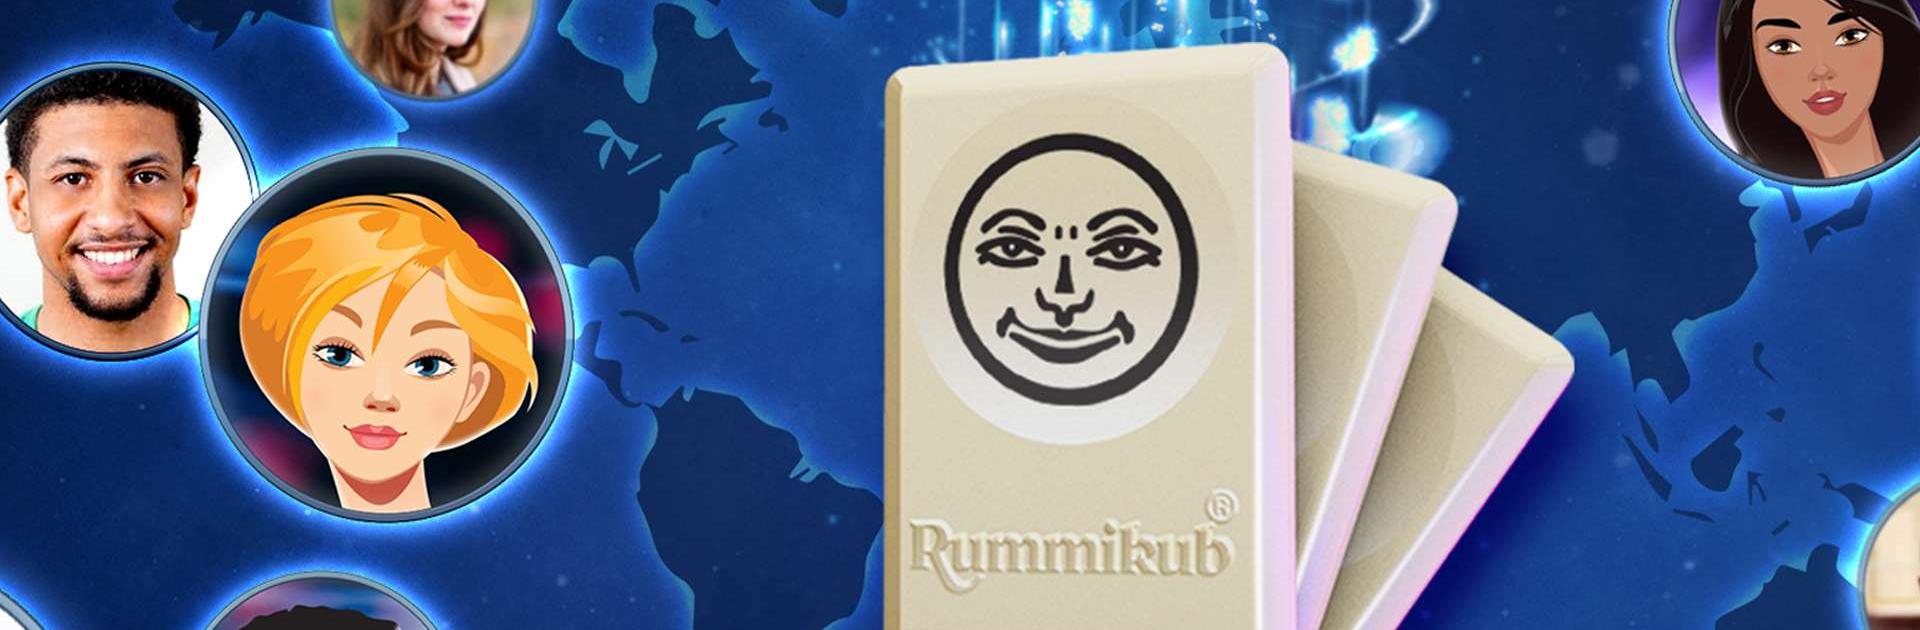 free rummikub download for mac